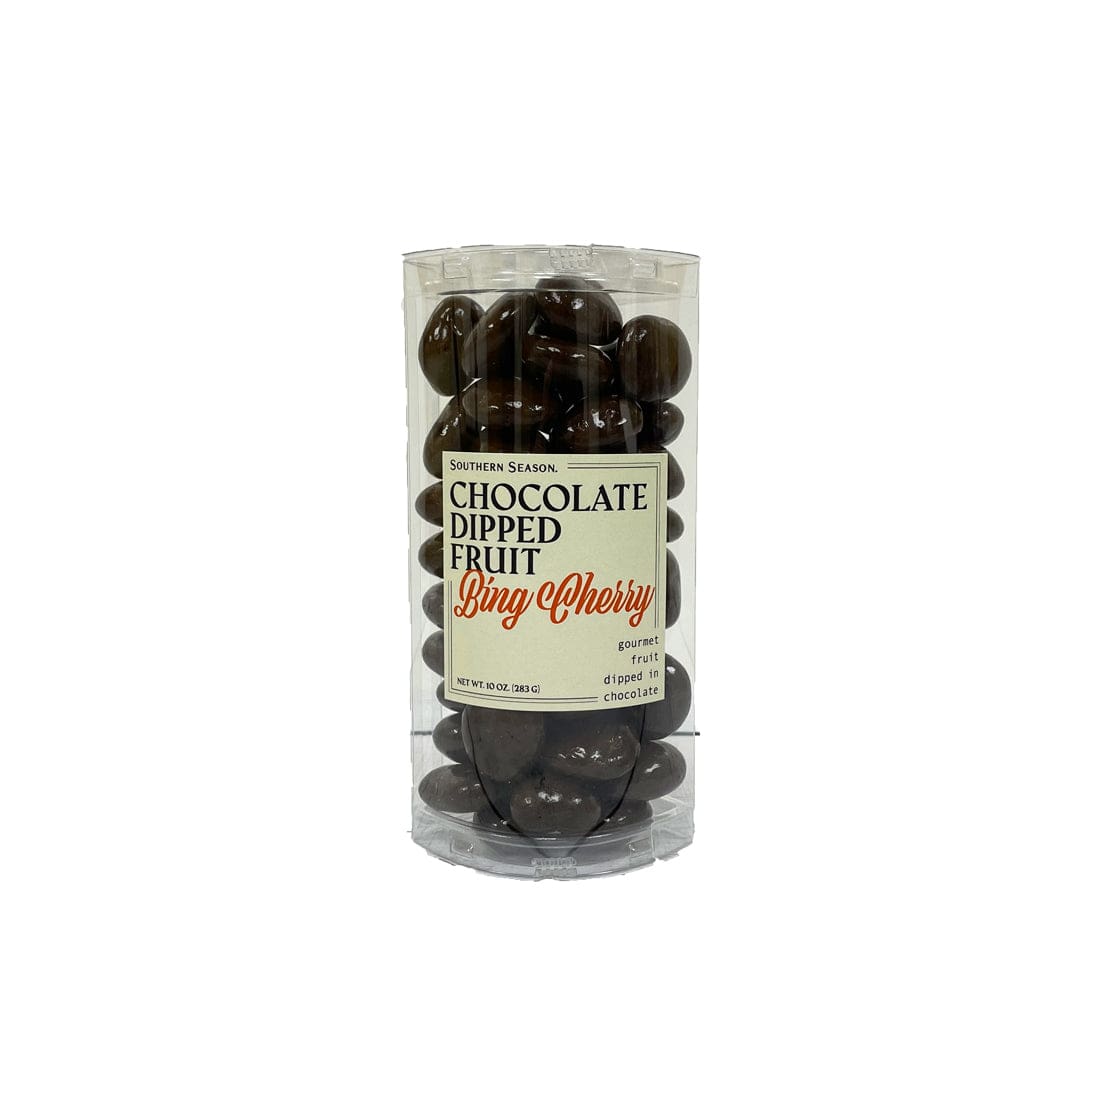 Southern Season Chocolate-Dipped Bing Cherries 10 oz